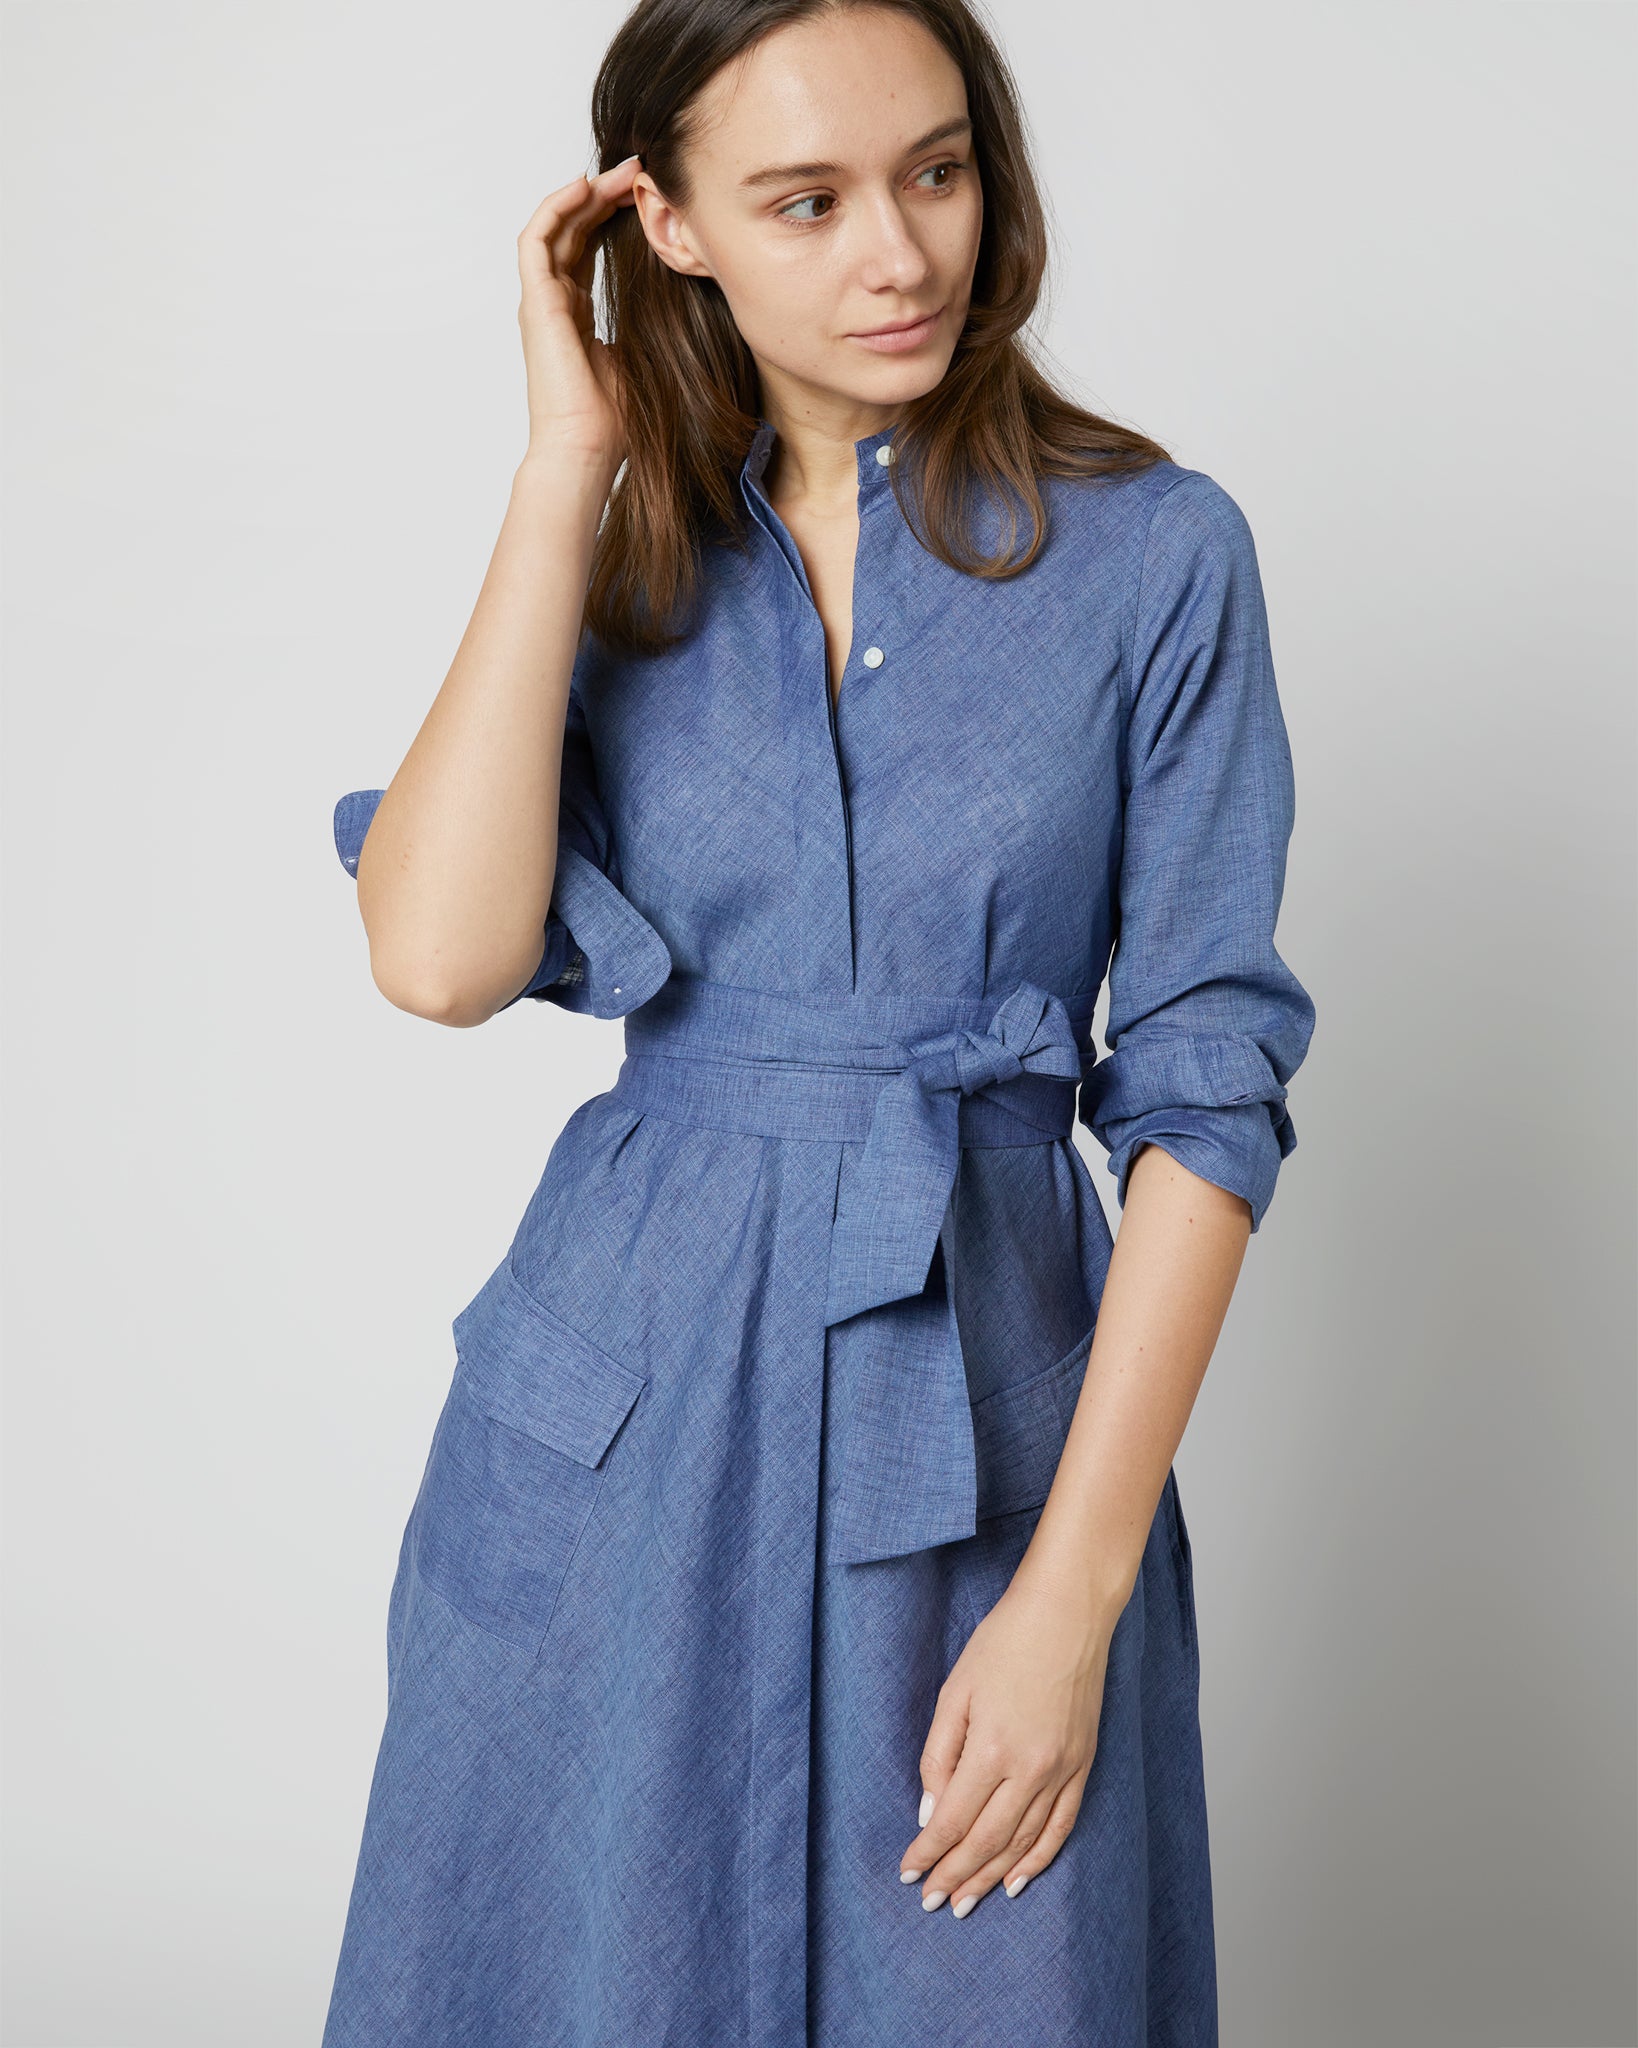 Olloum Sarina Dress Brand New with Tag (blue)